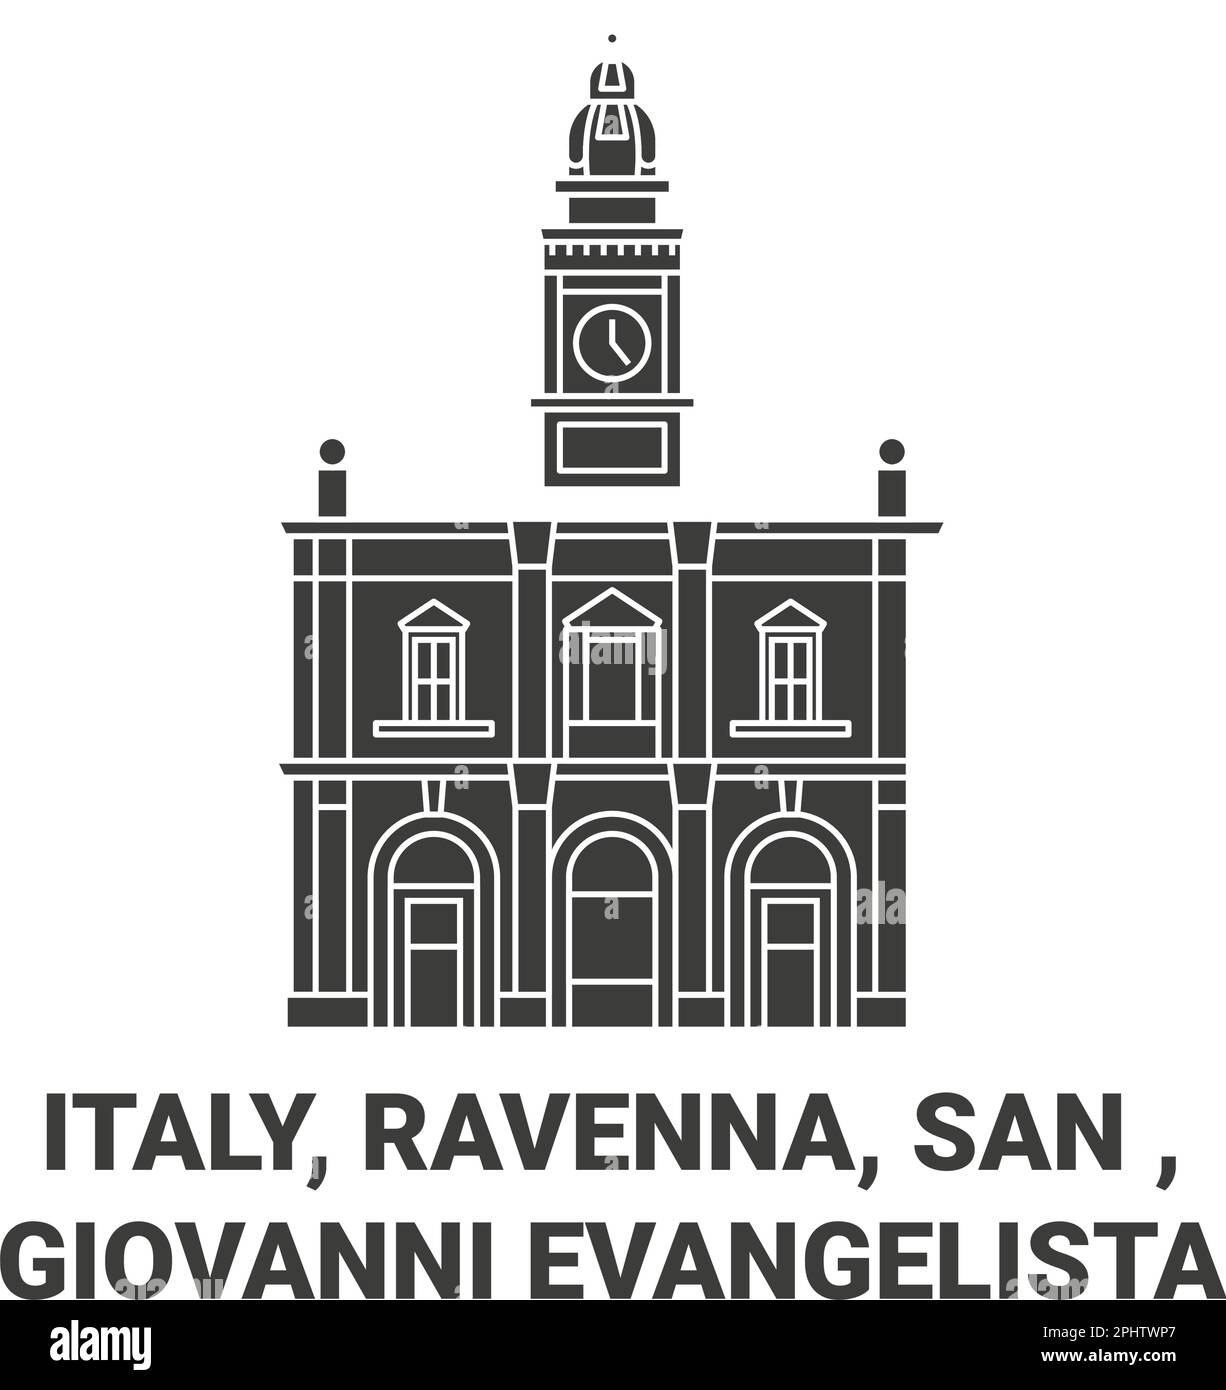 Italy, Ravenna, San , Giovanni Evangelista travel landmark vector illustration Stock Vector